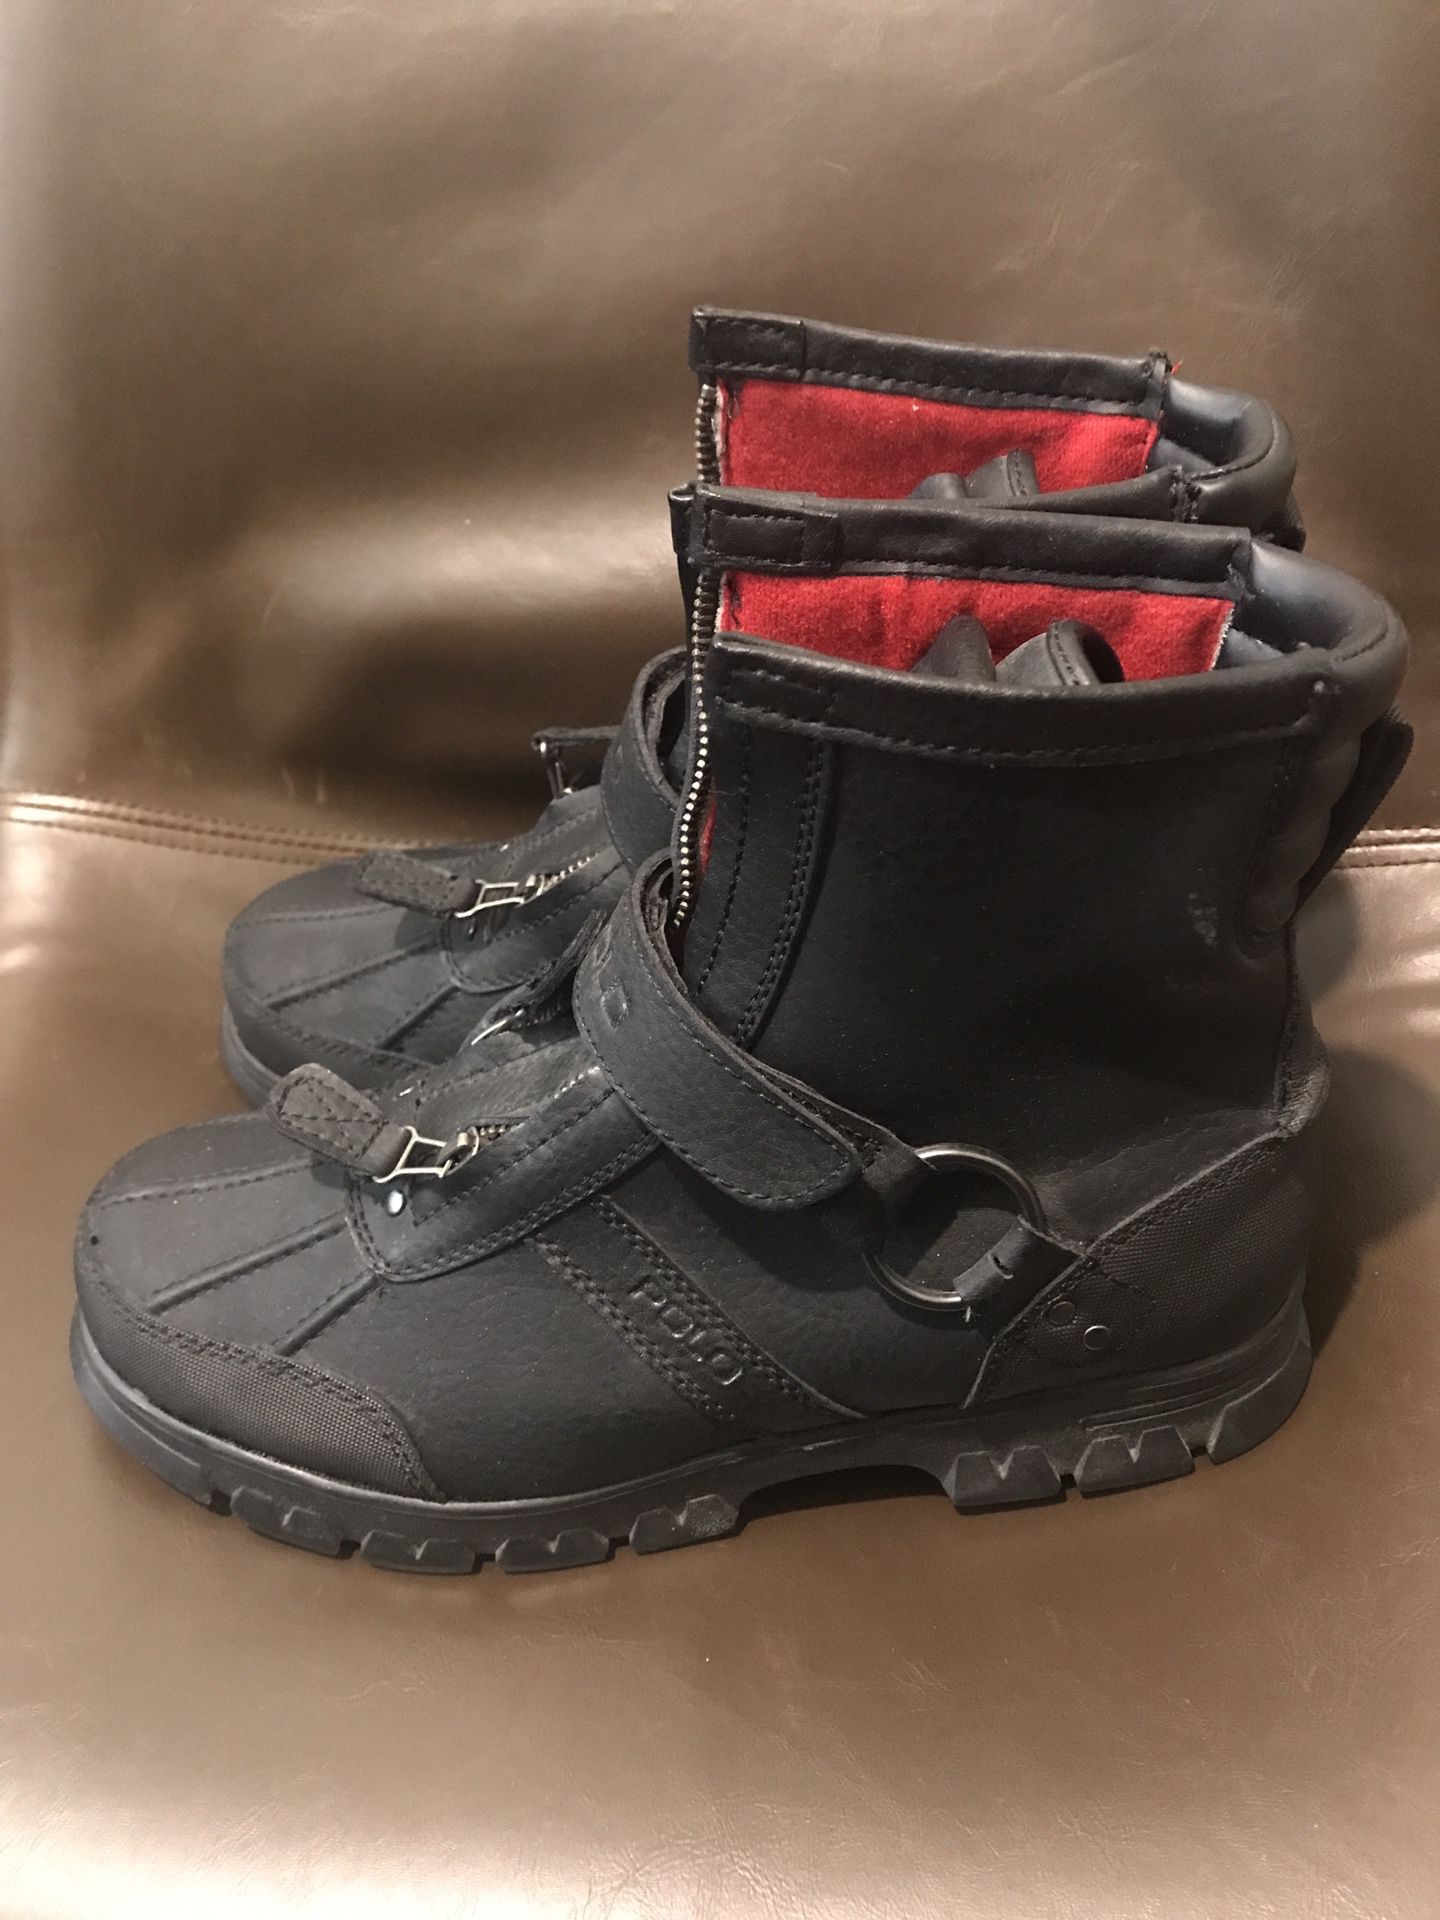 Polo Ralph Lauren Black Leather Boots Size 9.5